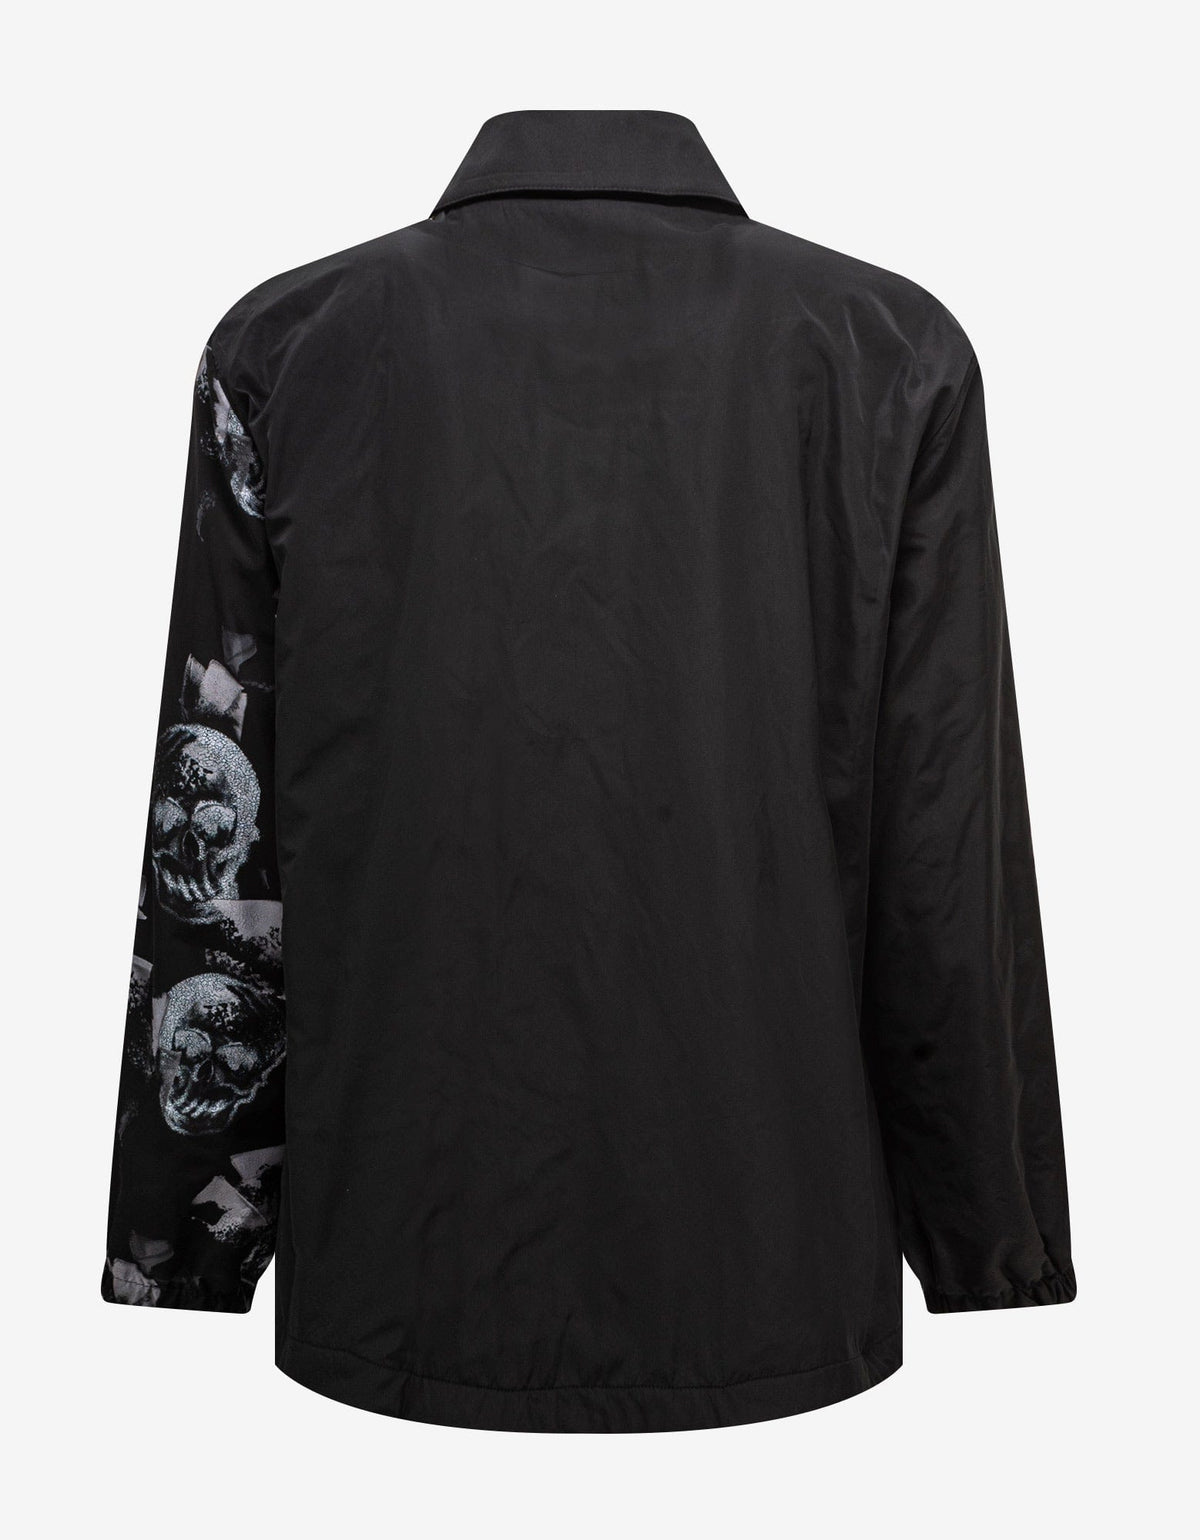 Palm Angels Black Sleeve Print Coach Jacket